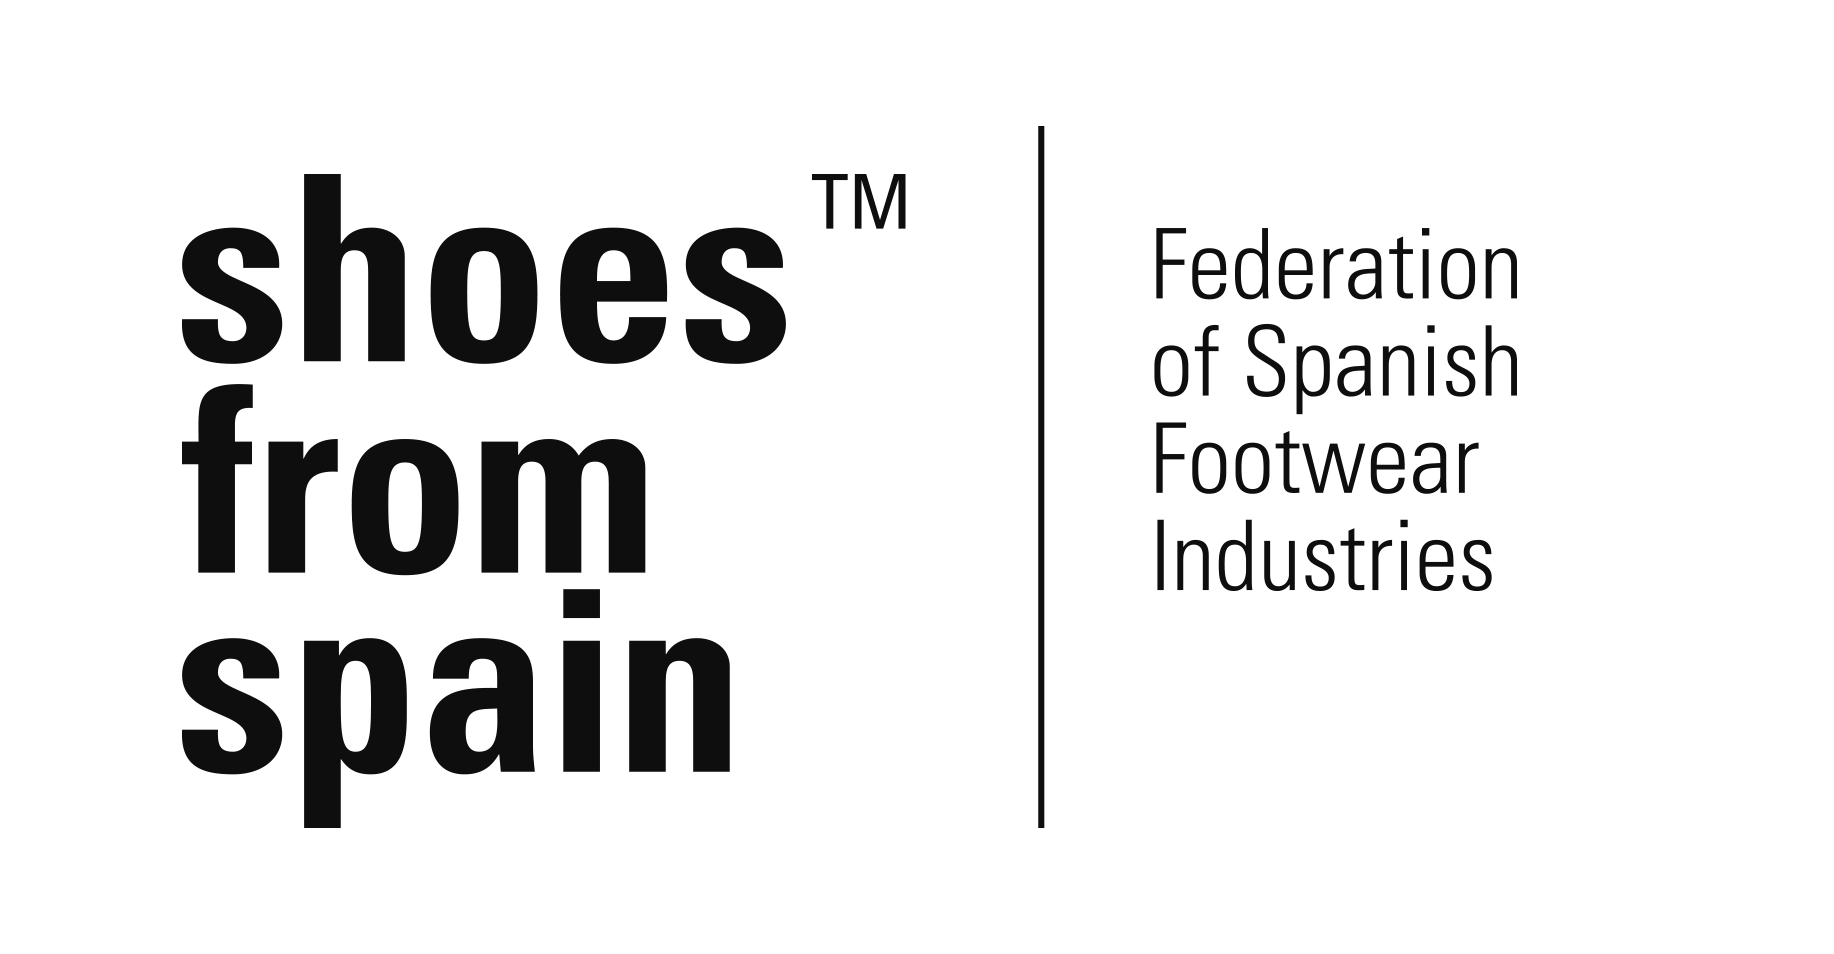 Федерация Испанских Производителей Обуви (FICE)